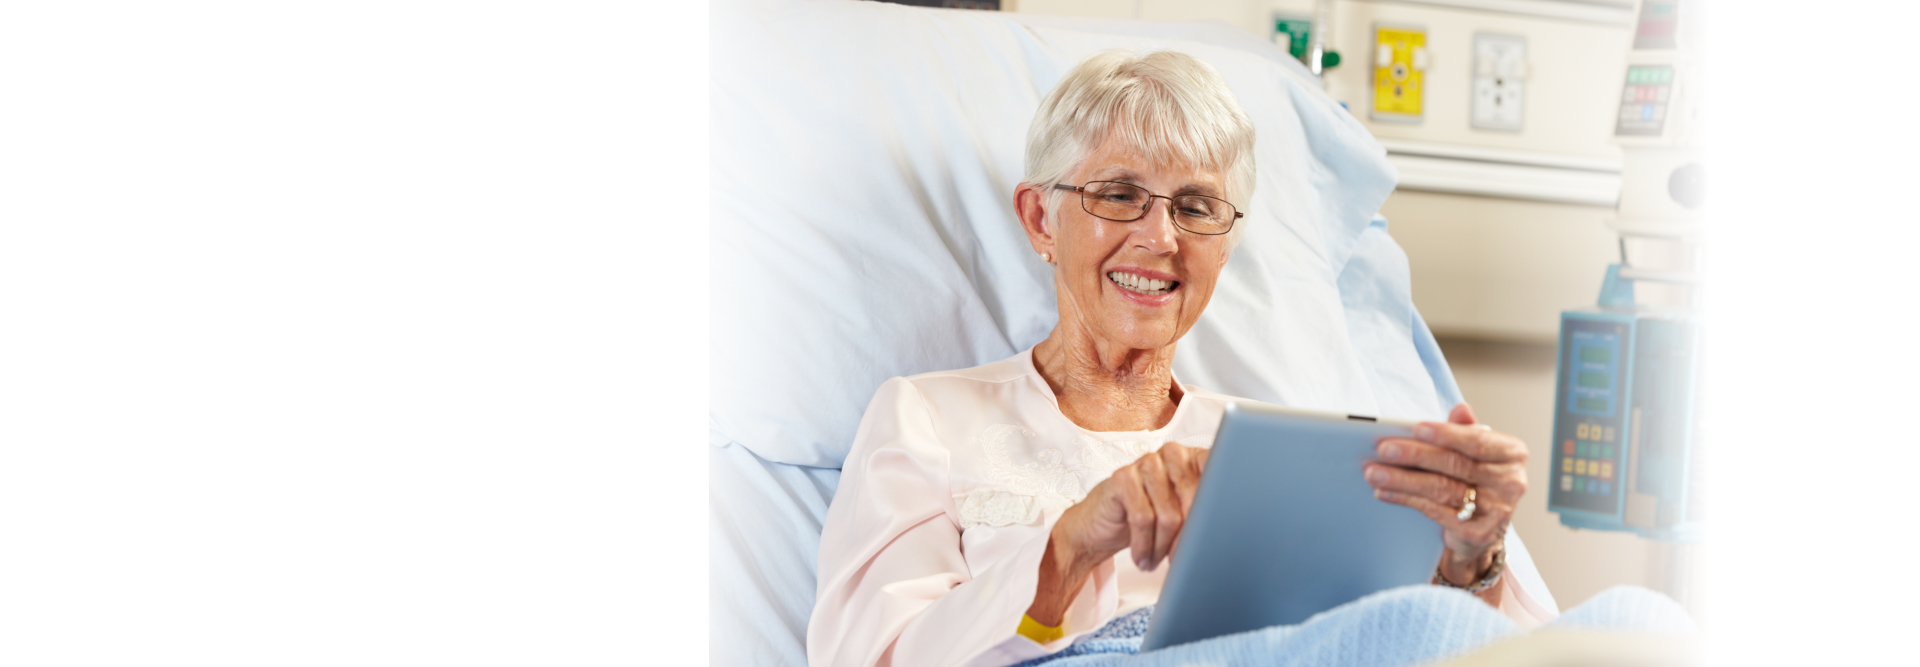 elderly woman using tablet